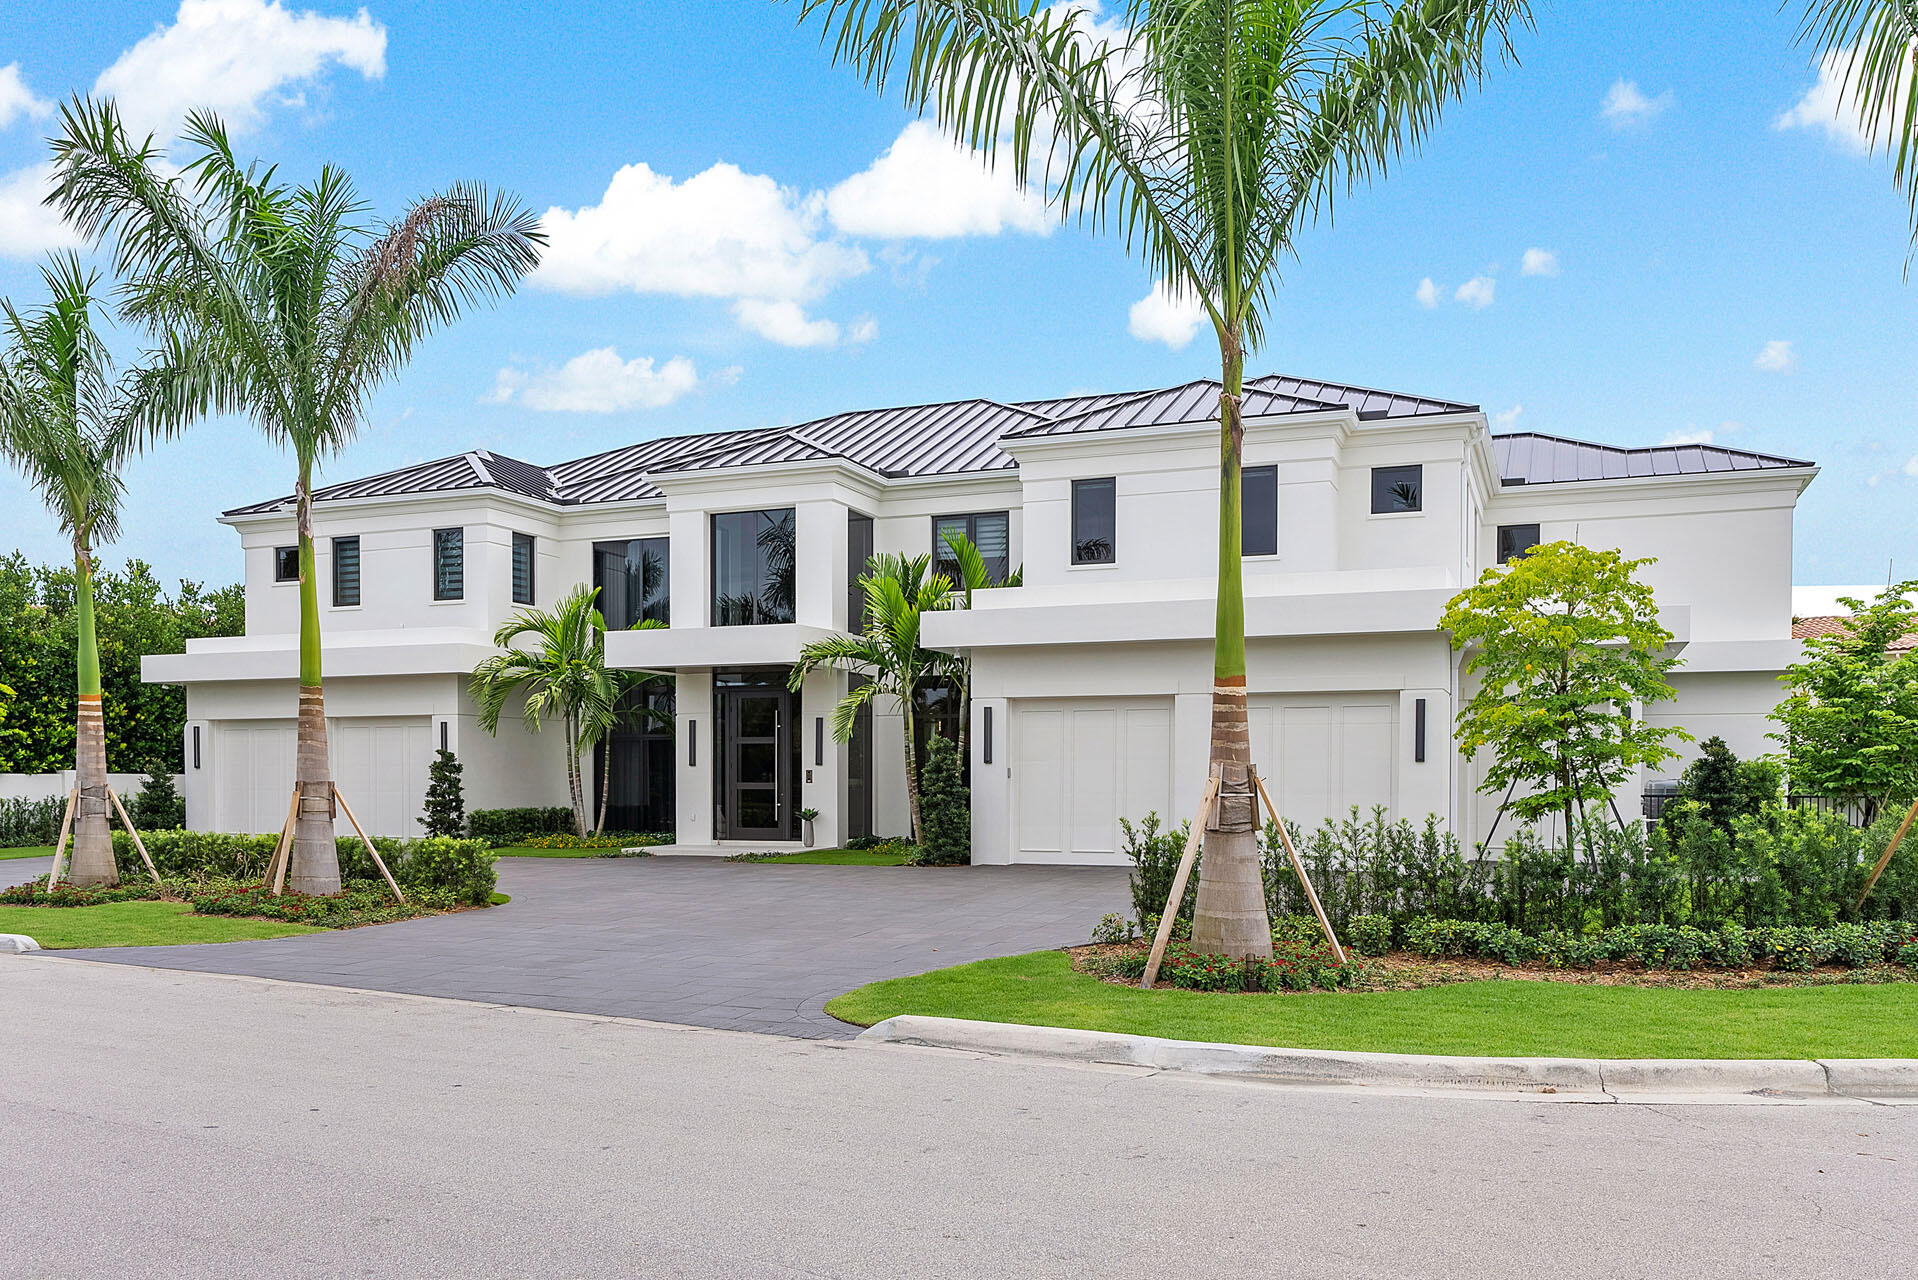 484 Royal Palm Way, Boca Raton, Palm Beach County, Florida - 6 Bedrooms  7.5 Bathrooms - 